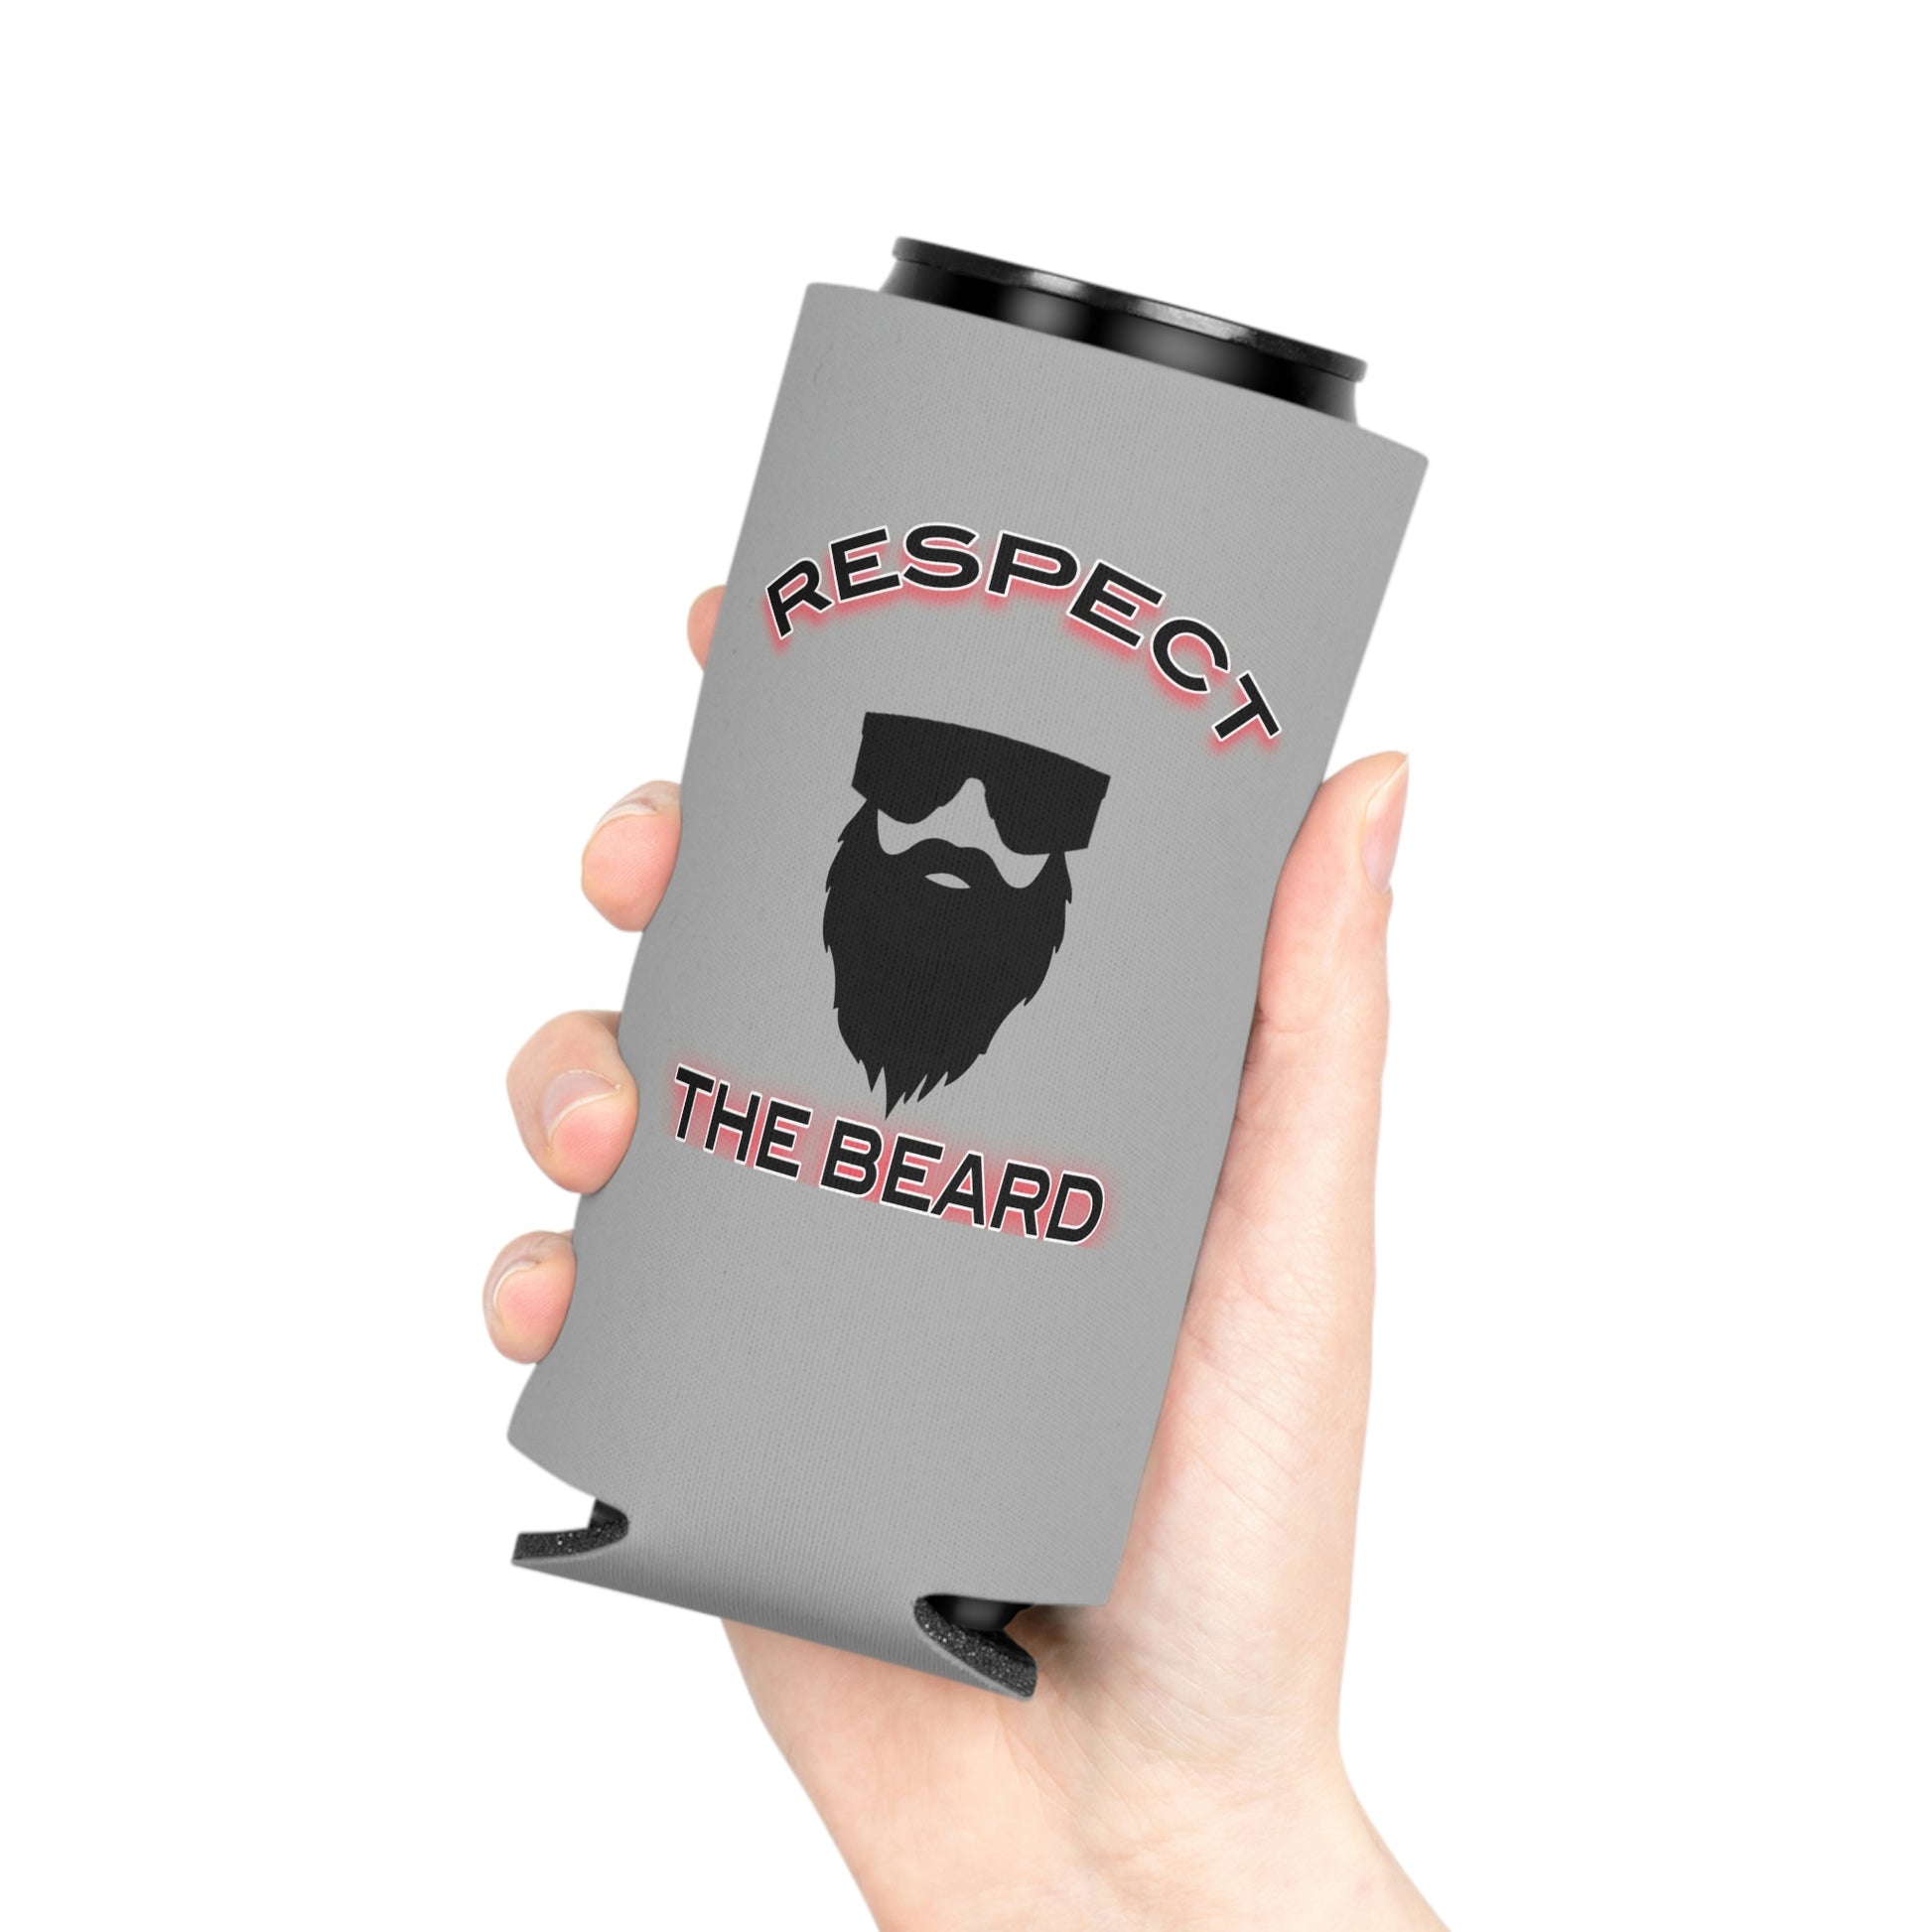 Respect The Beard Coozie - Backwoods Branding Co.